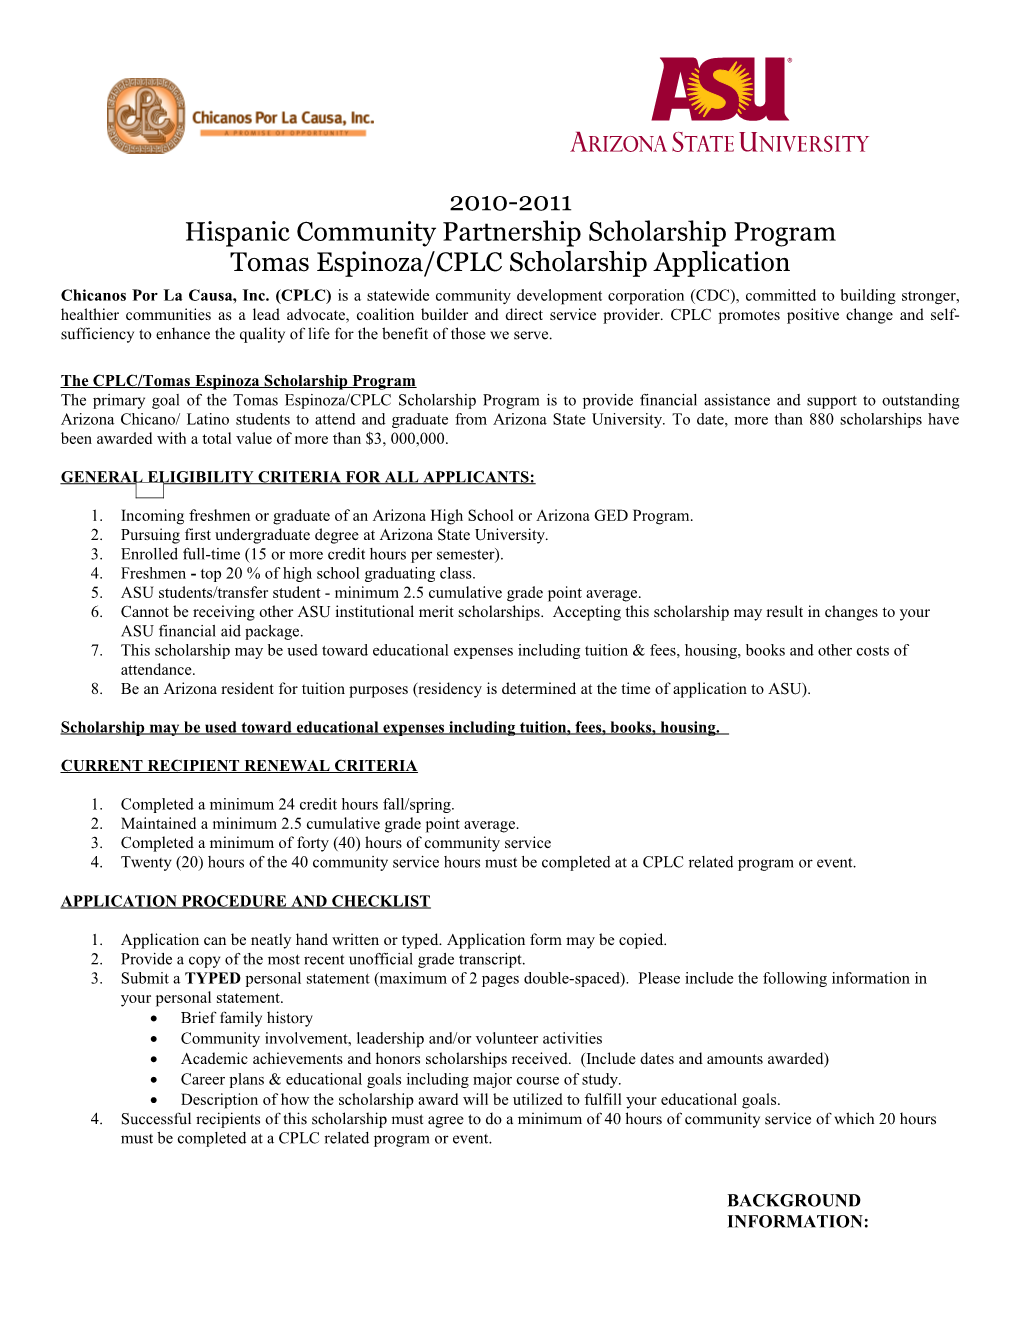 Hispanic Community Partnership Scholarship Program